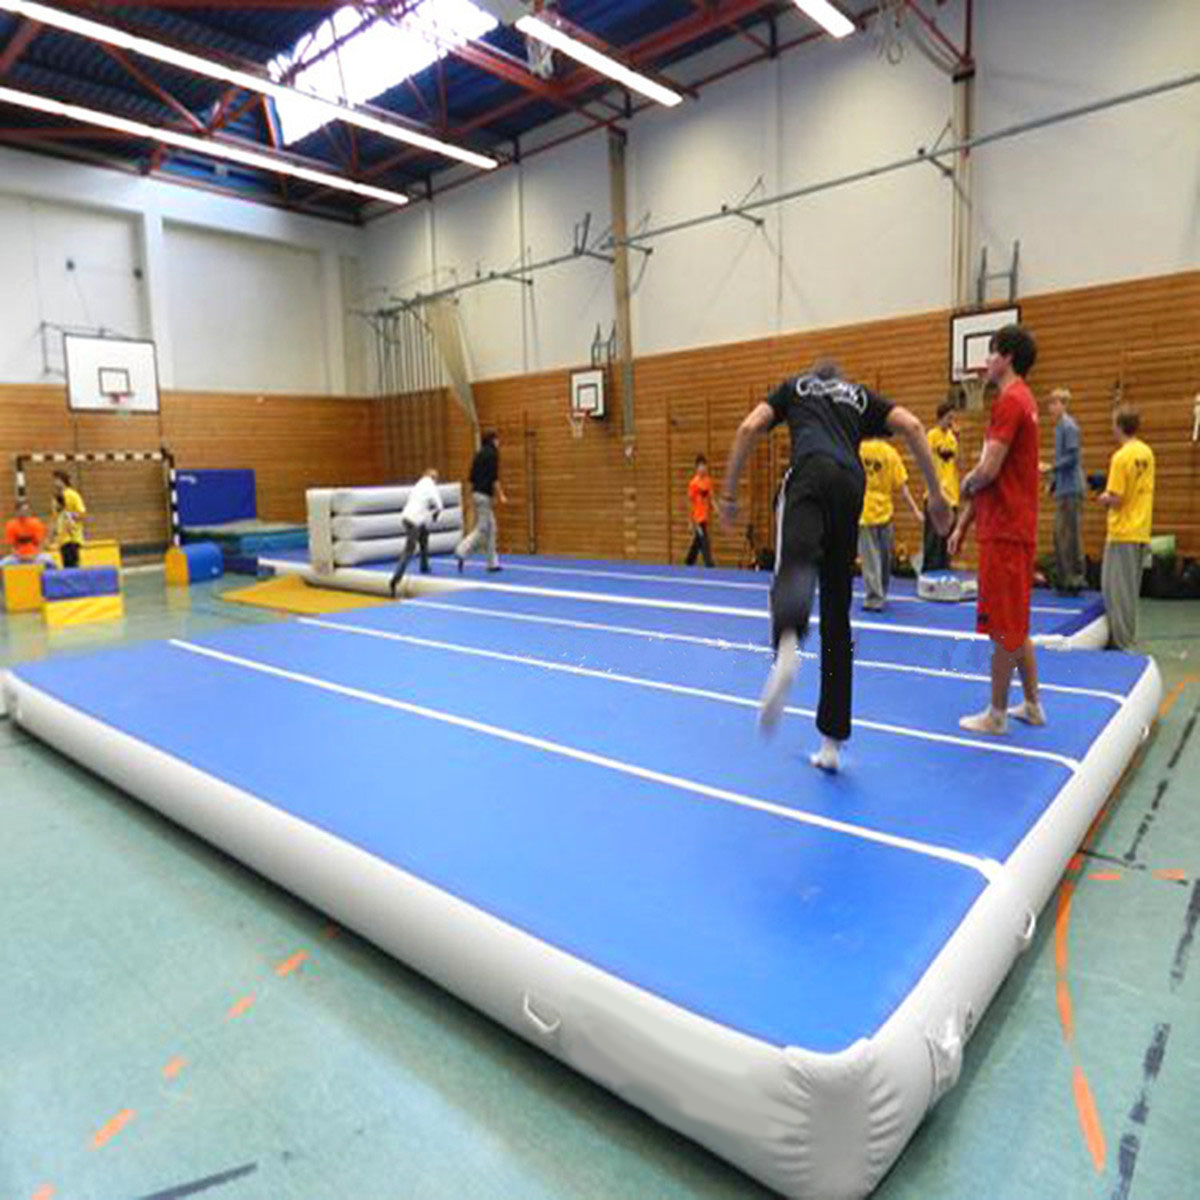 472x78x7.8inch  Inflatable Gym Mat Air Track Floor Tumbling Gymnastics Cheerleading Pad